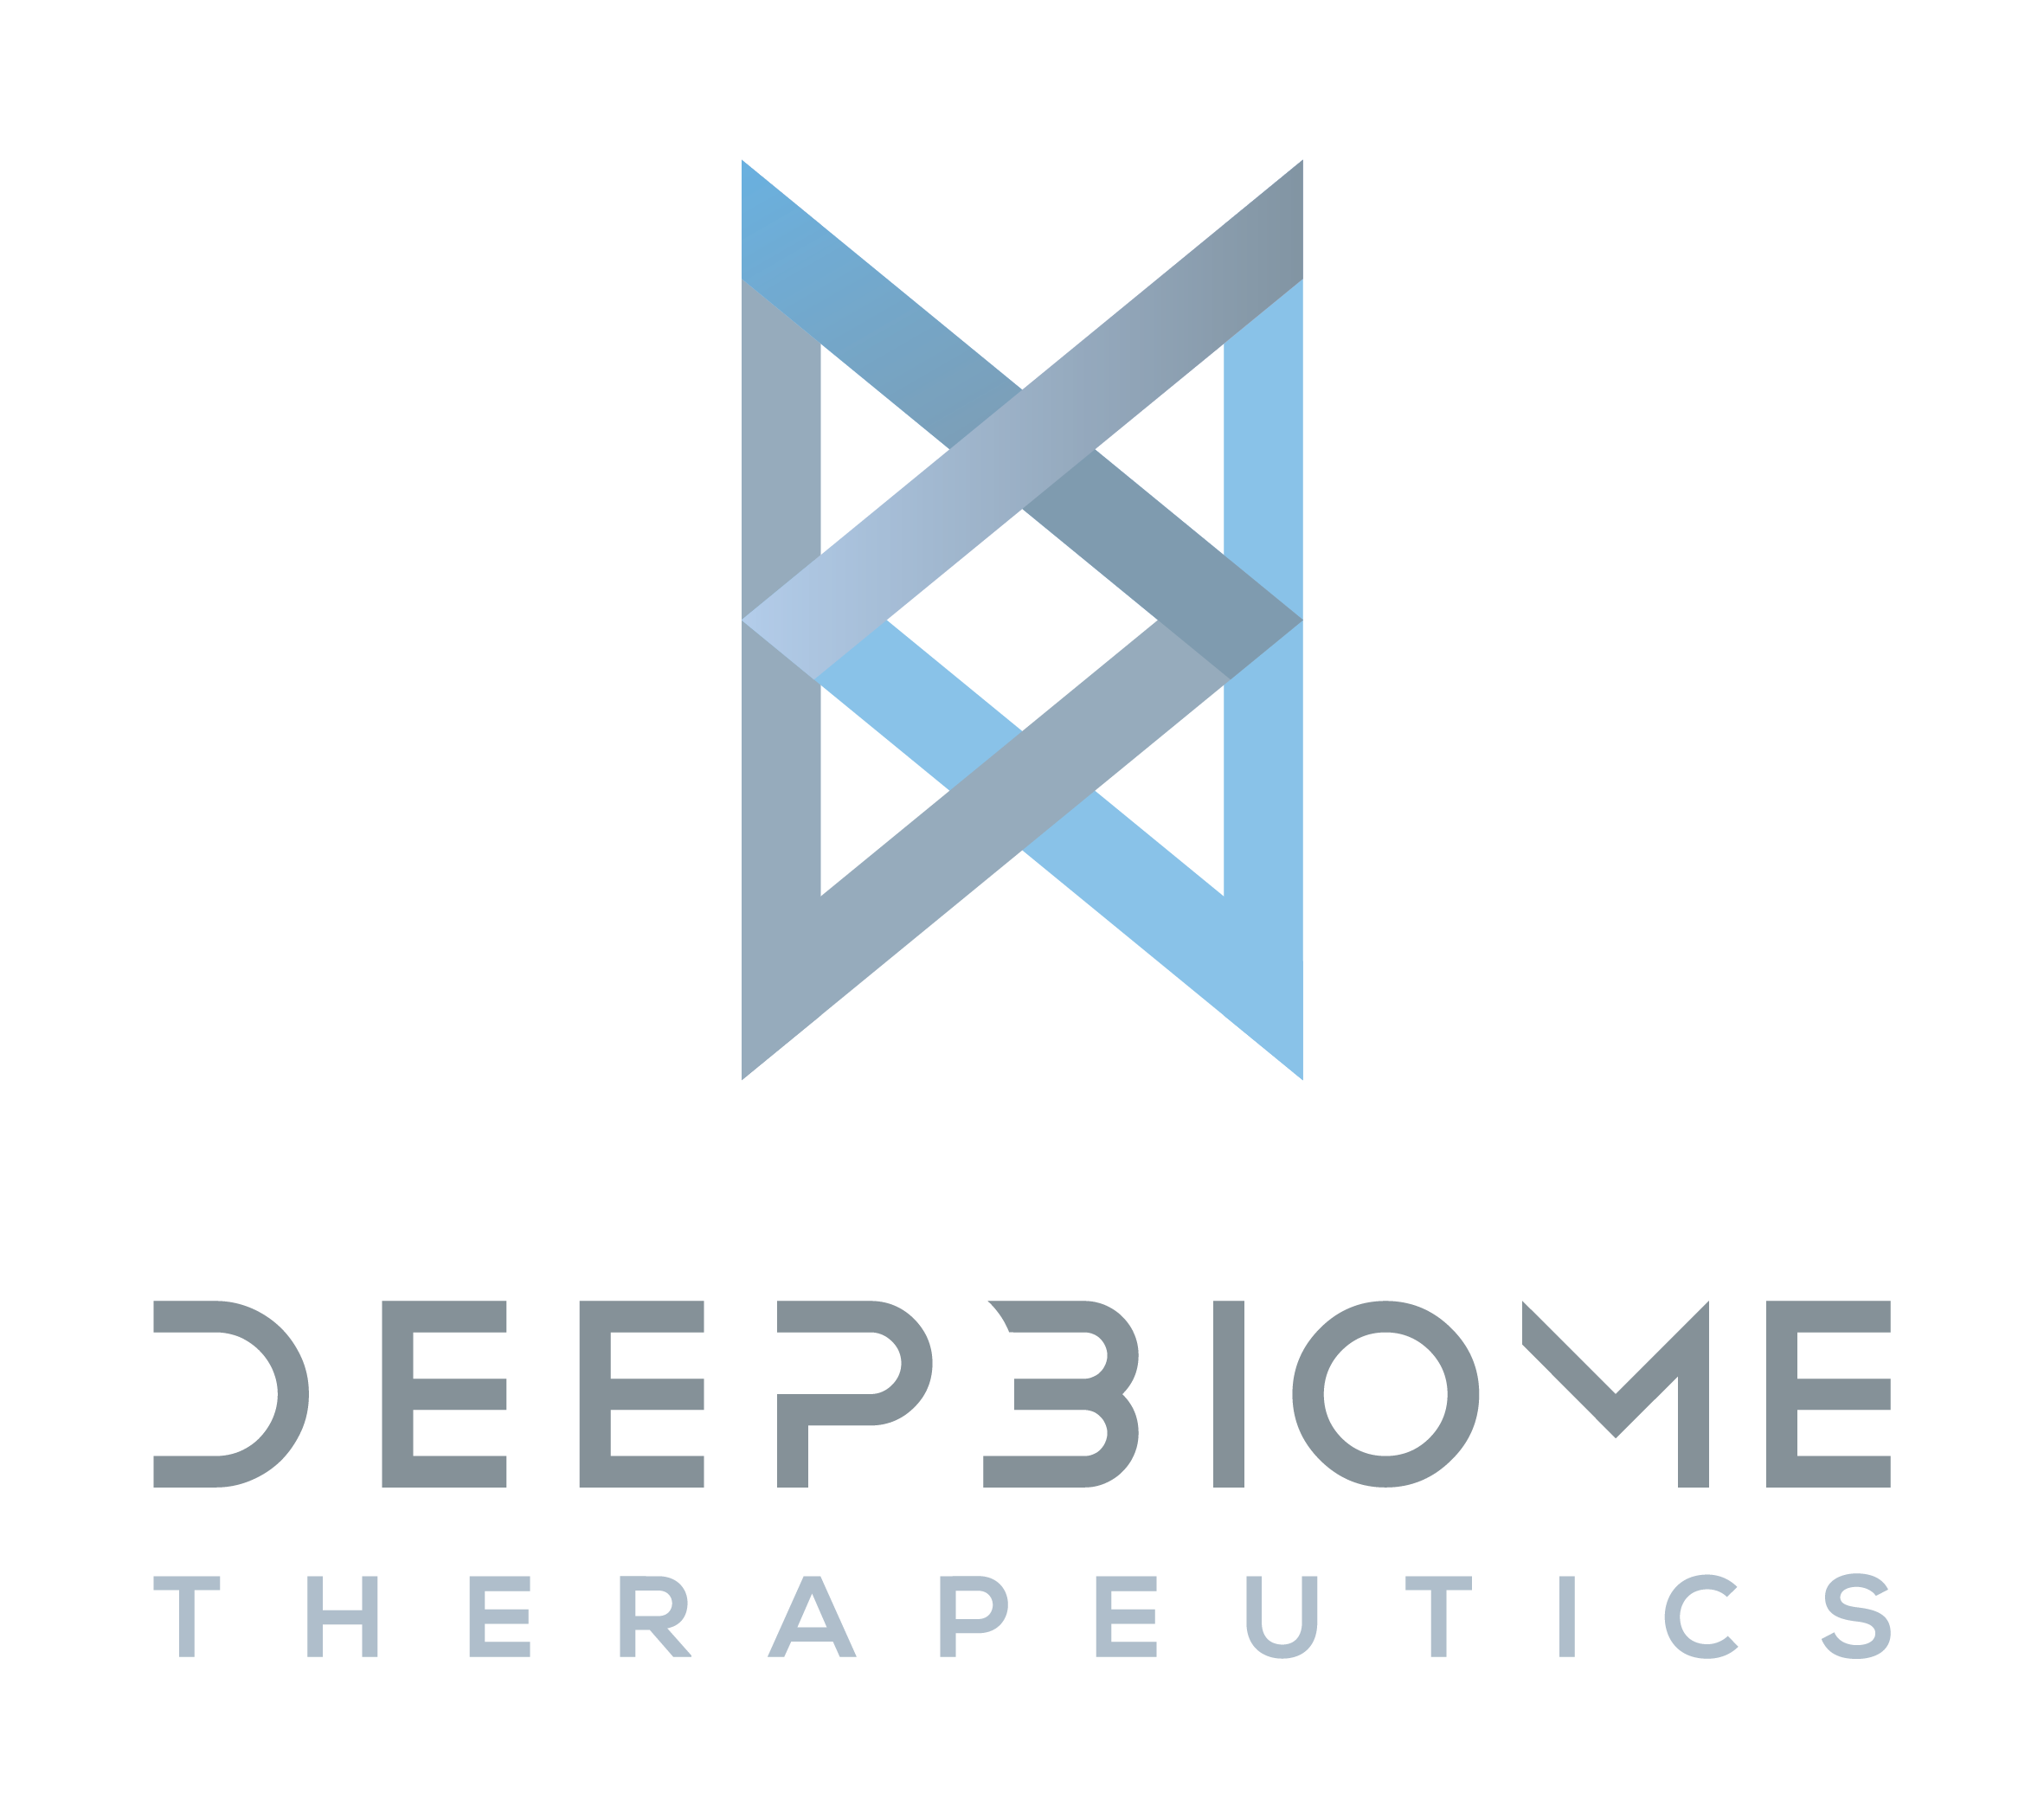 Deepbiome logo